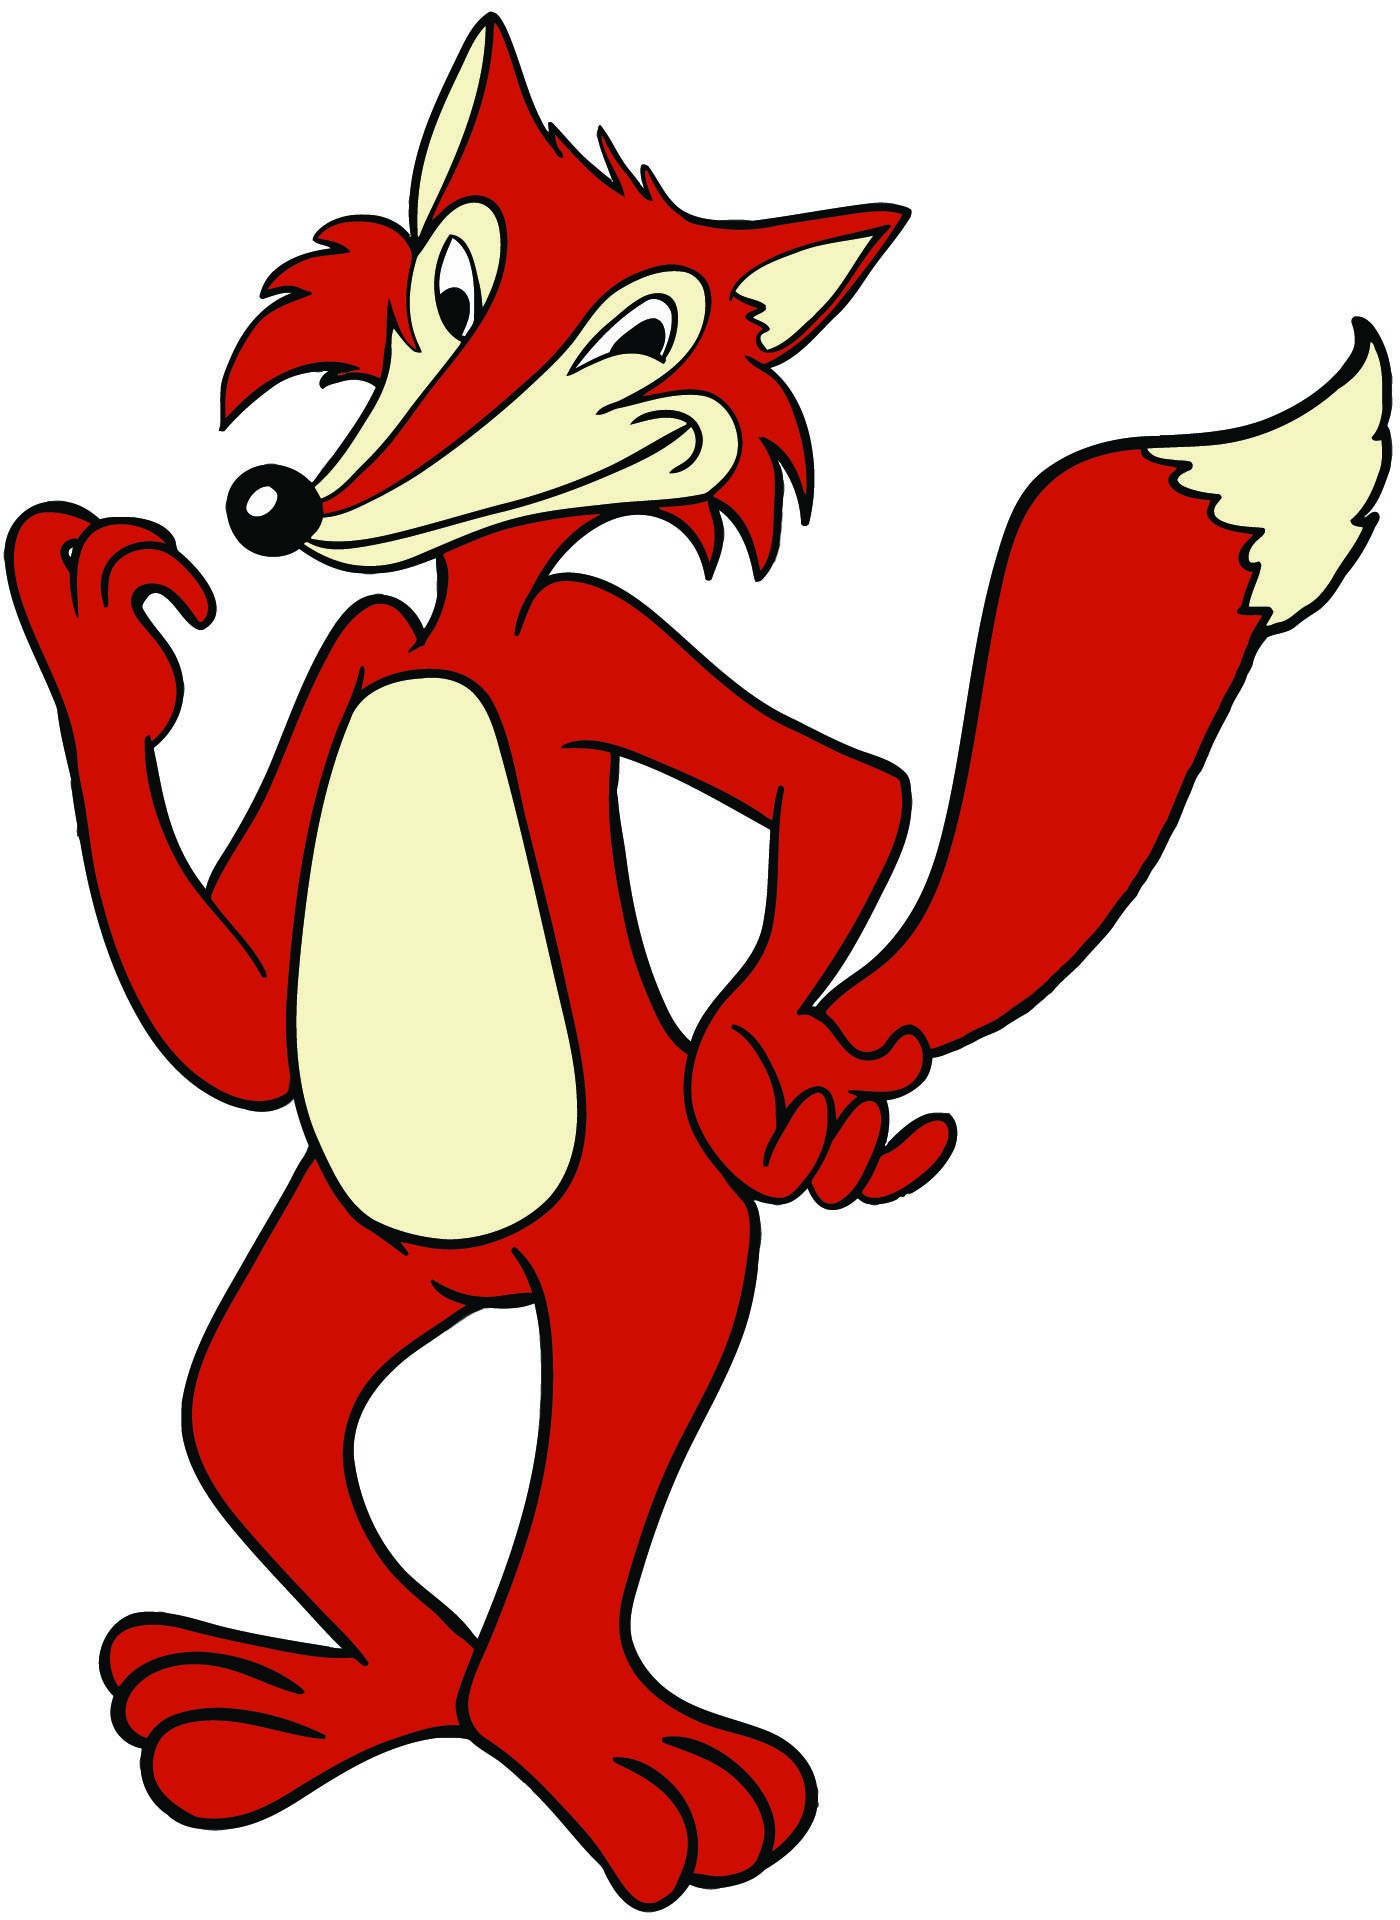 red cartoon fox standing confidently